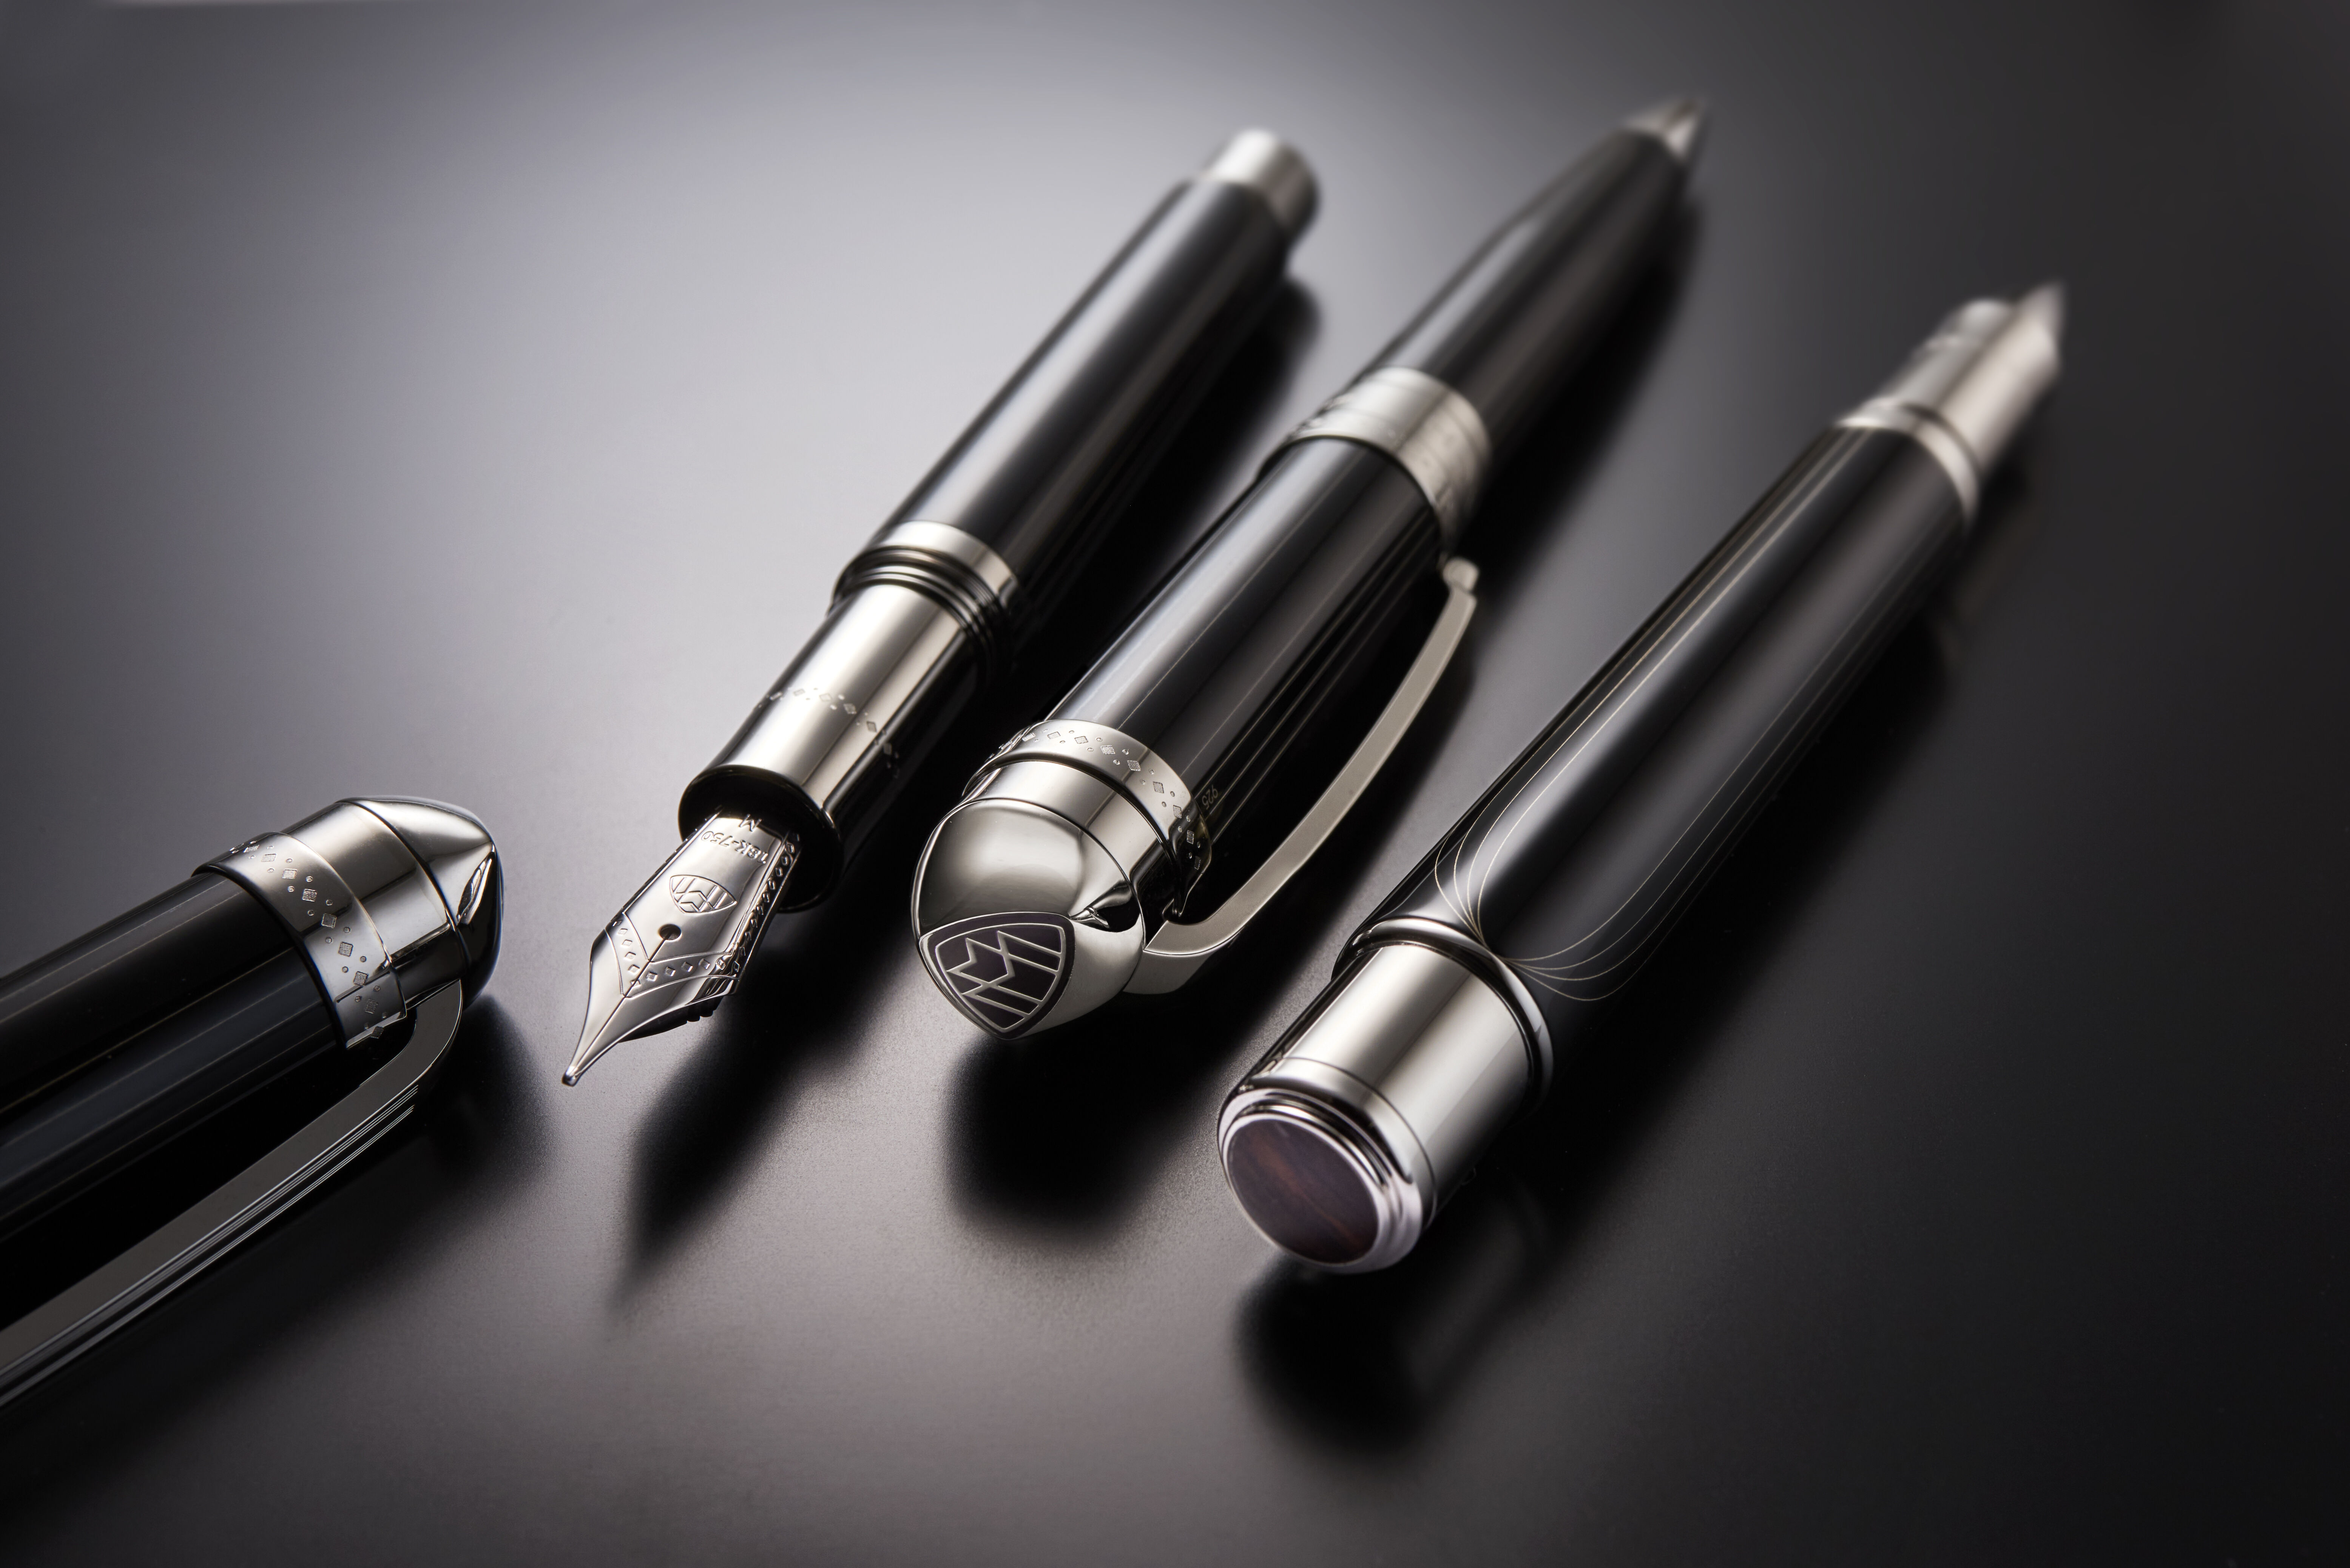 The Best Luxury European Fountain Pens